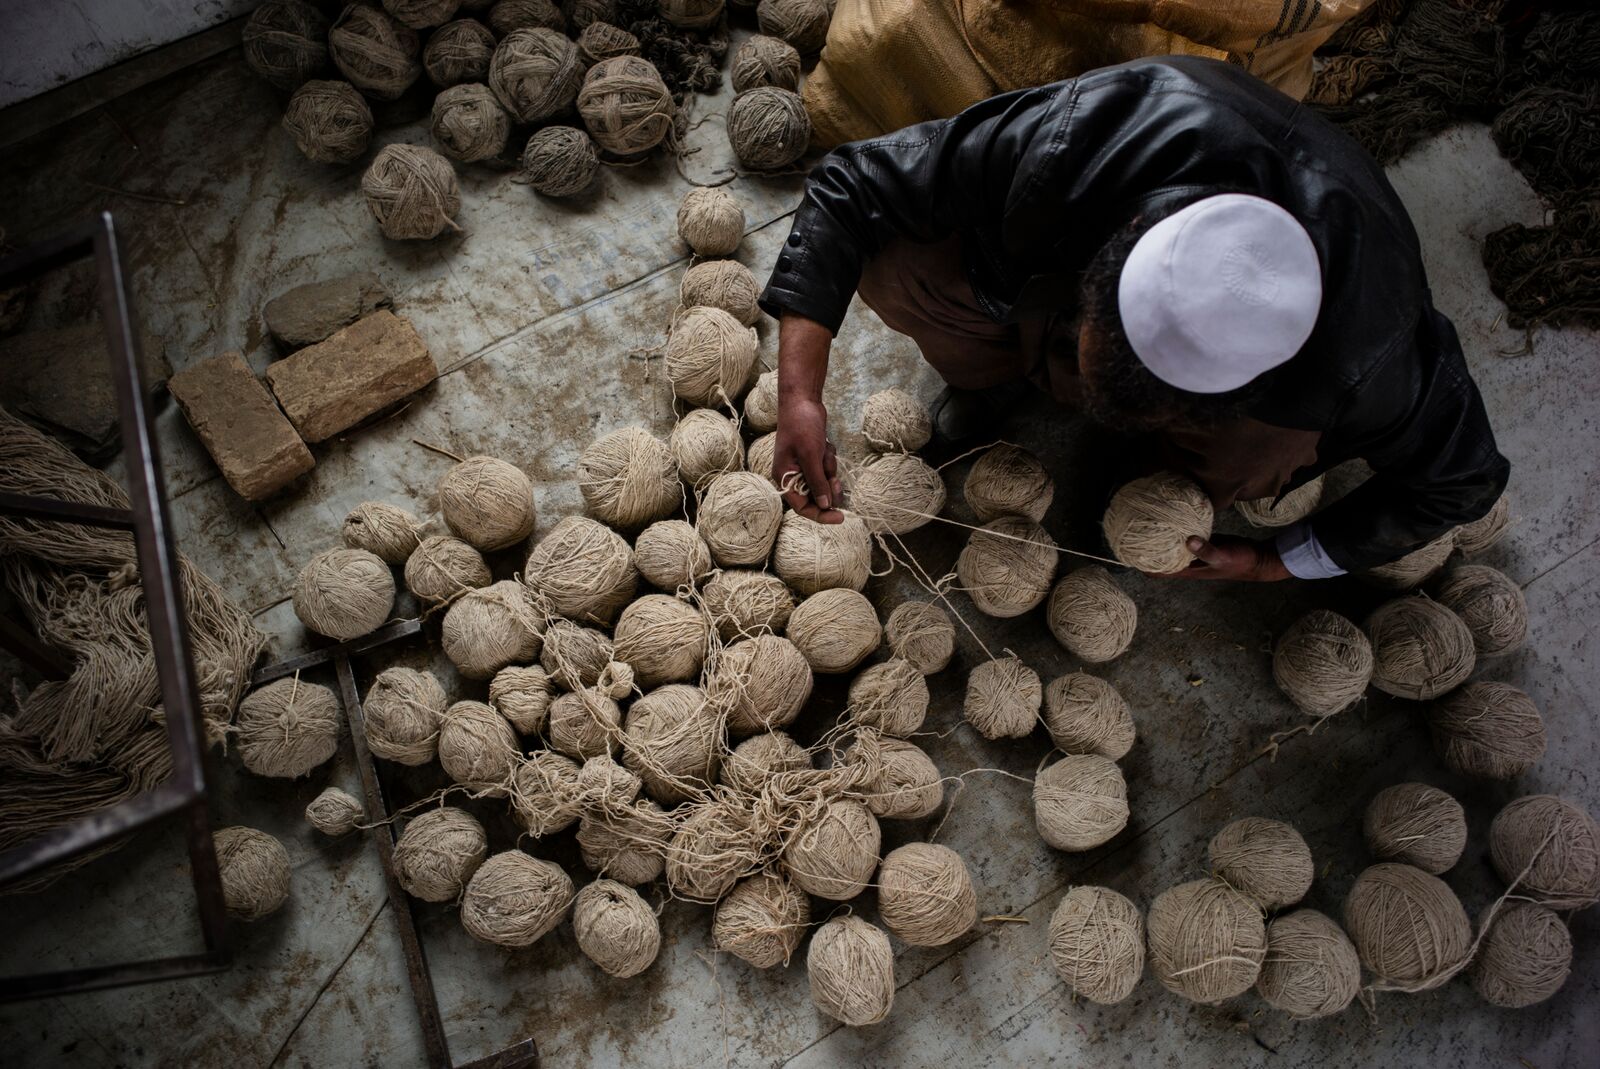 Afghani craftsmen with balls of yarn, Ishkar, Black Friday